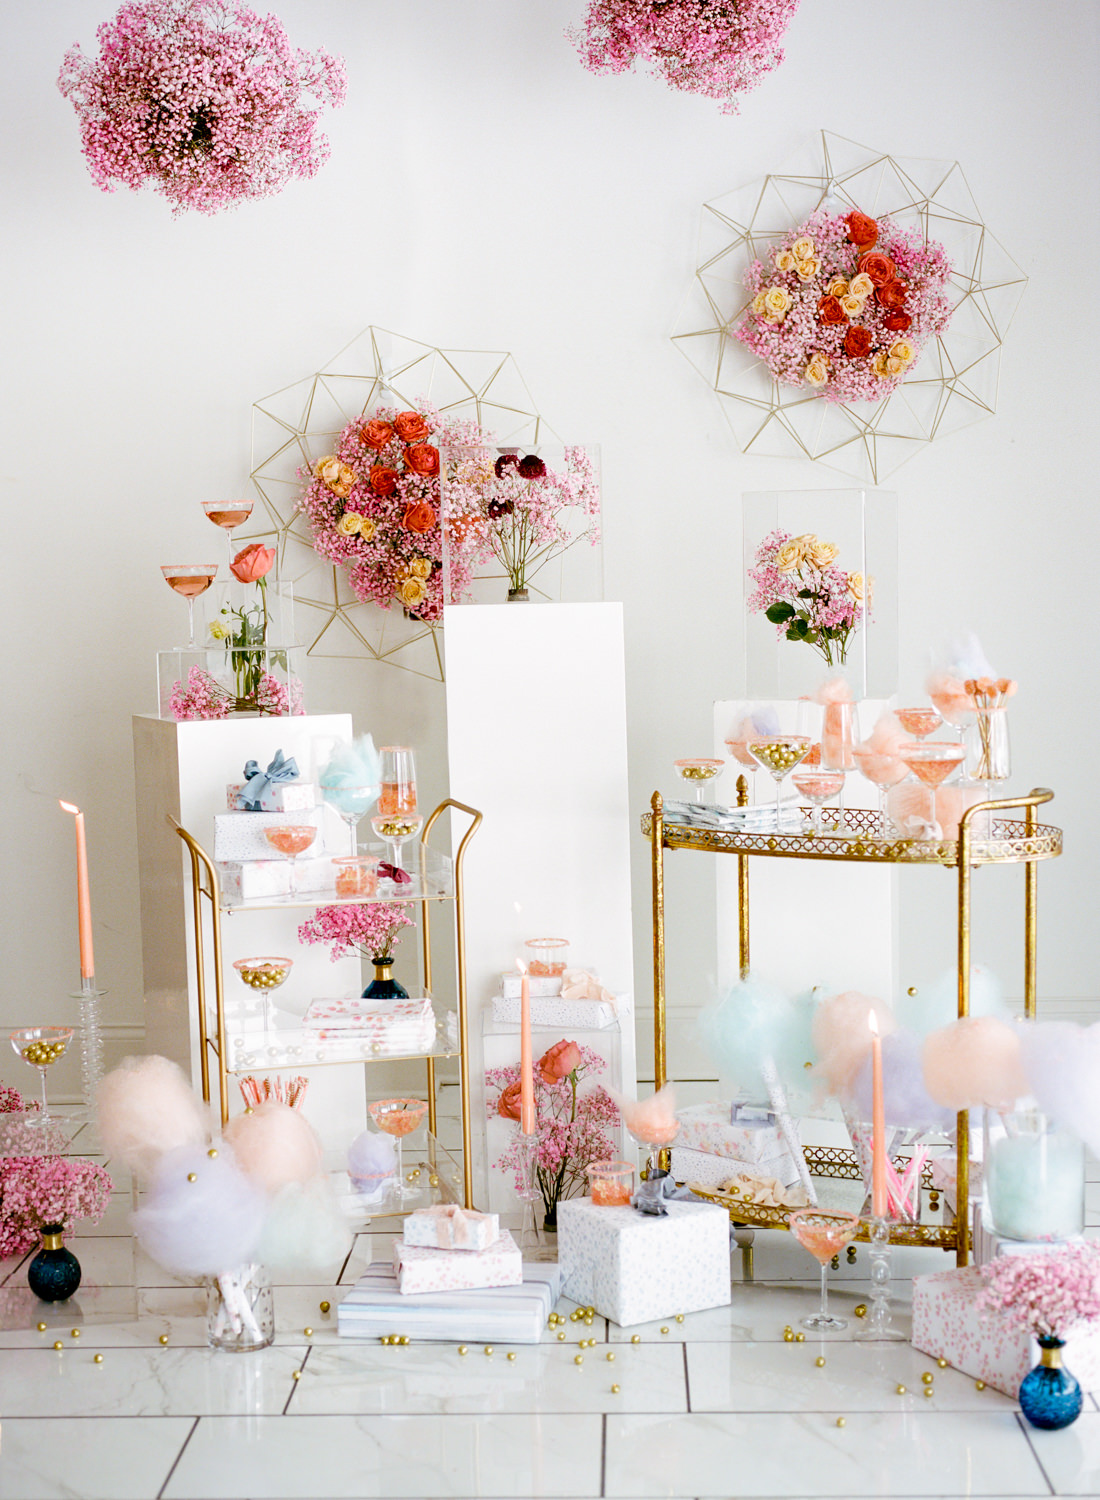 Sara Elizabeth Weddings, Lavish Floral Design wedding inspiration, St. Louis wedding photographer